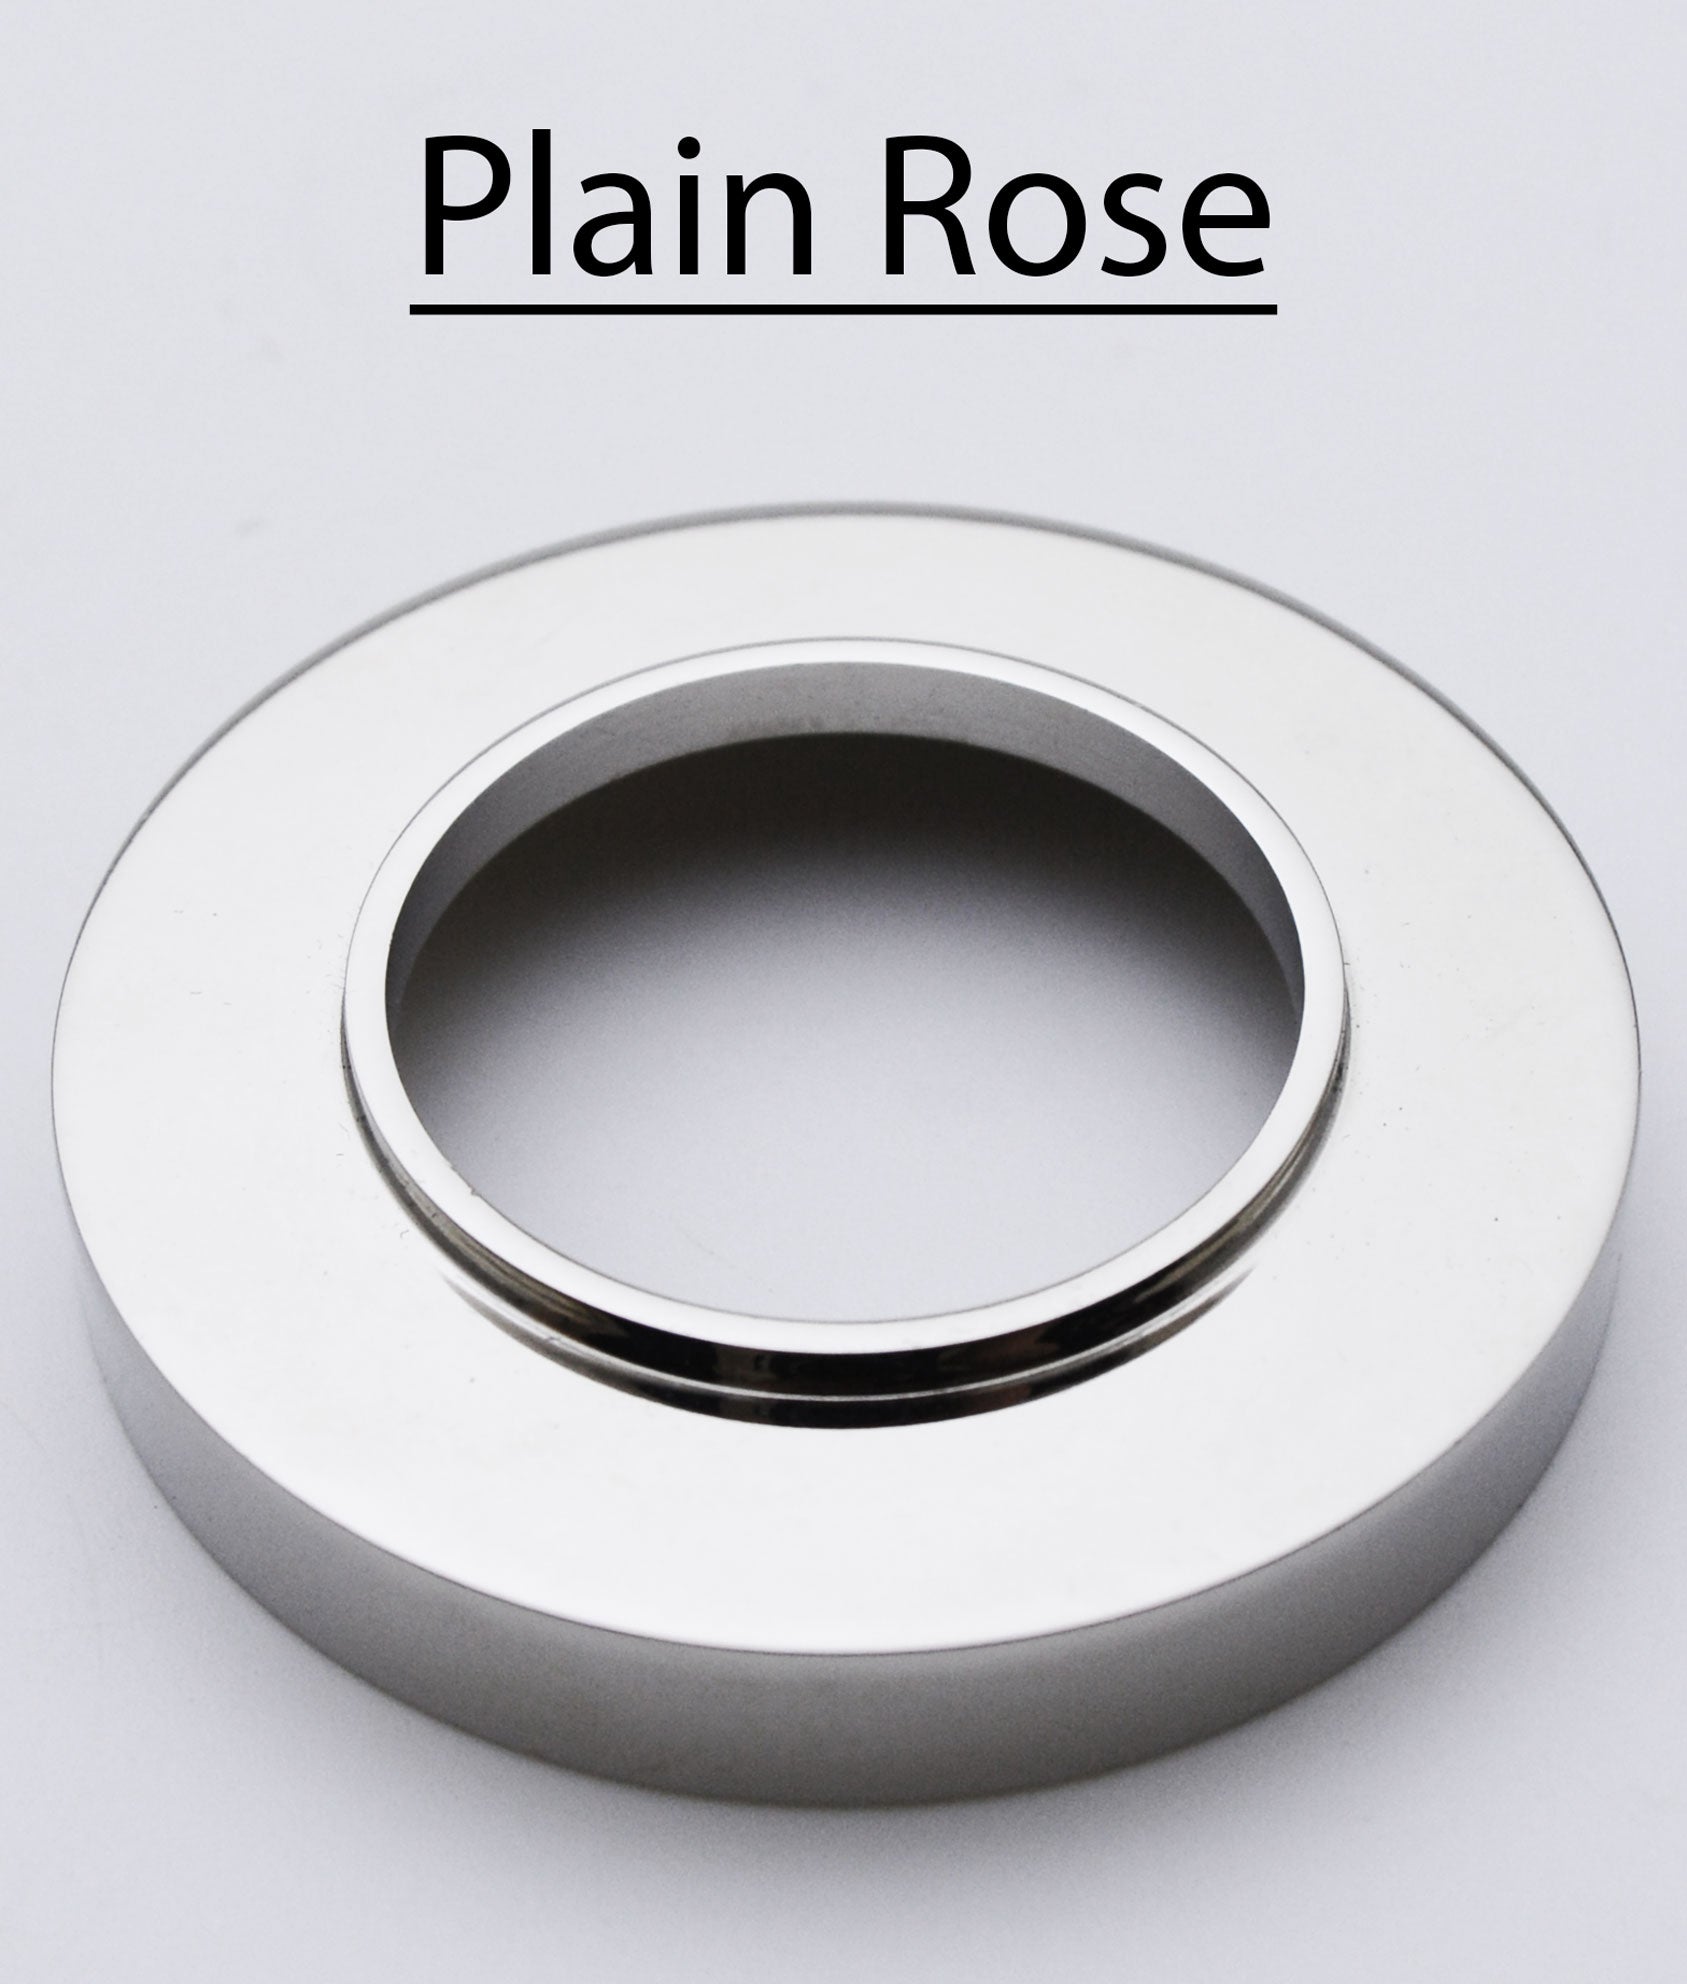 Bjorn Snib & Release with Plain Rose